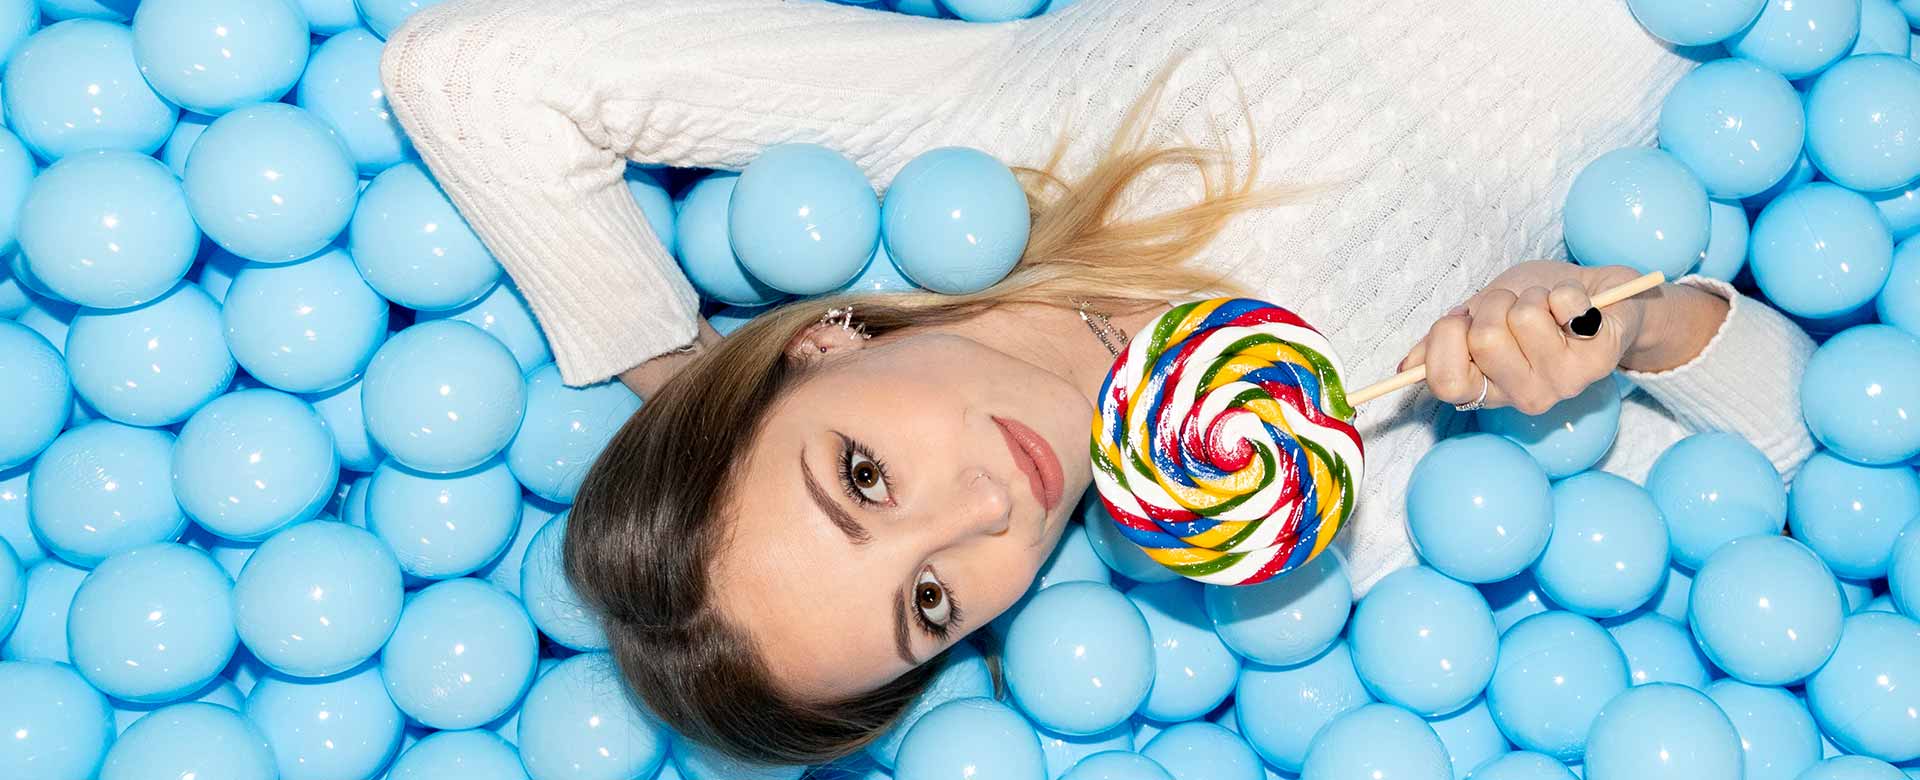 Immagine di una ragazza in una vasca di palline azzurre